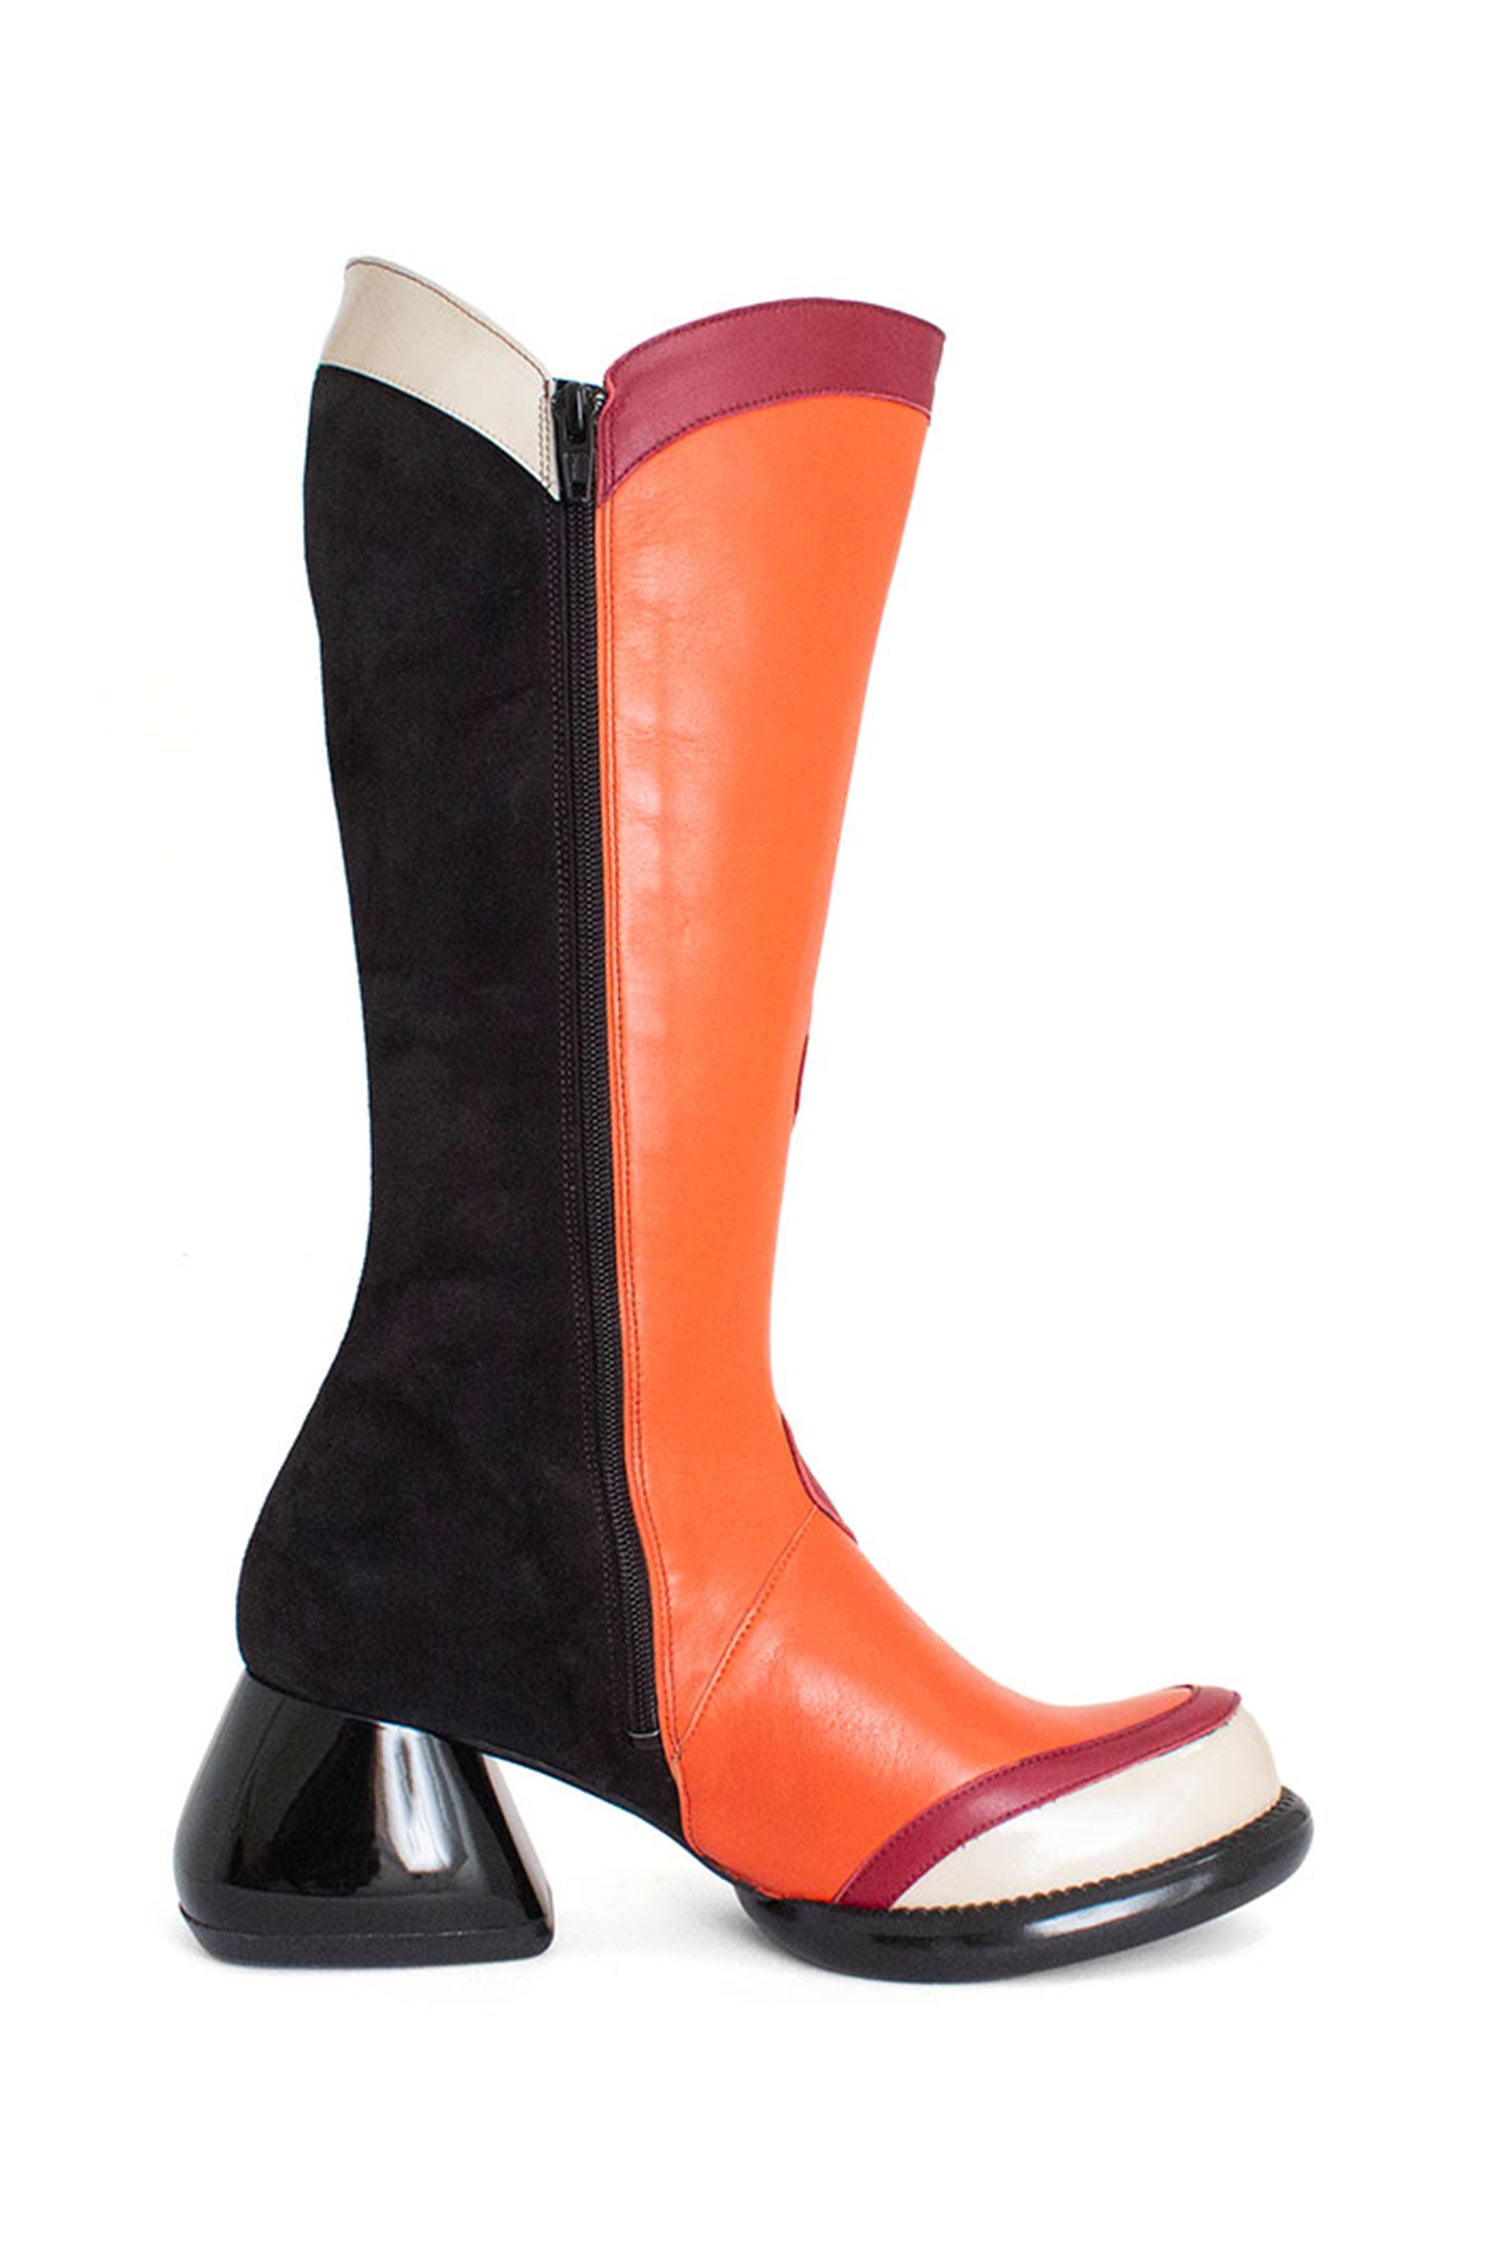 Anna Sui x John Fluevog Warhol Boot<br> Orange Multi - Anna Sui